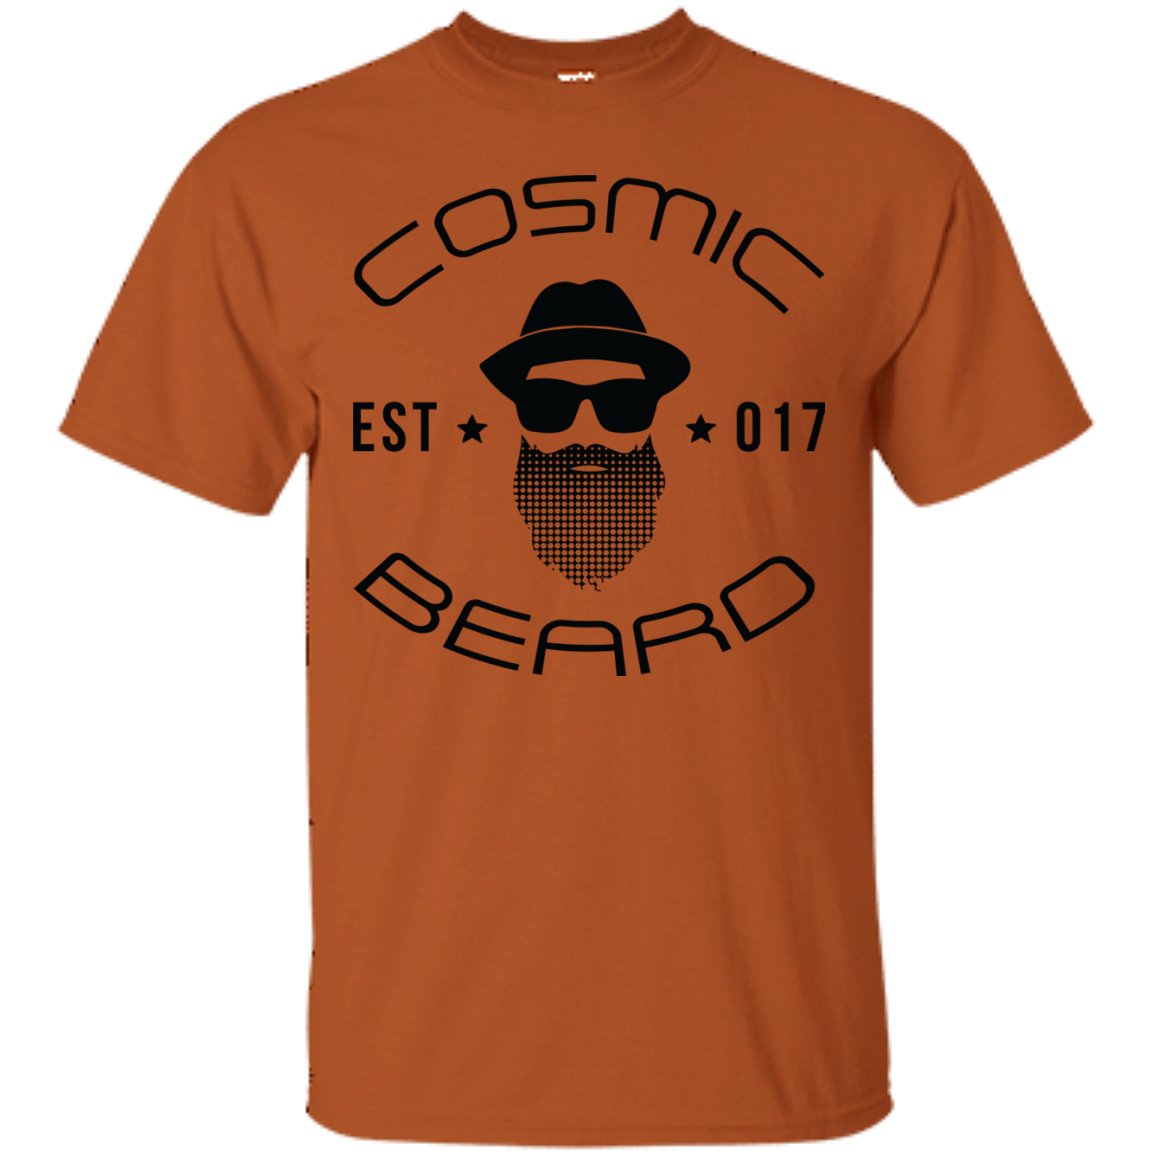 Cosmic Beard Branded T-Shirt with Black Logo